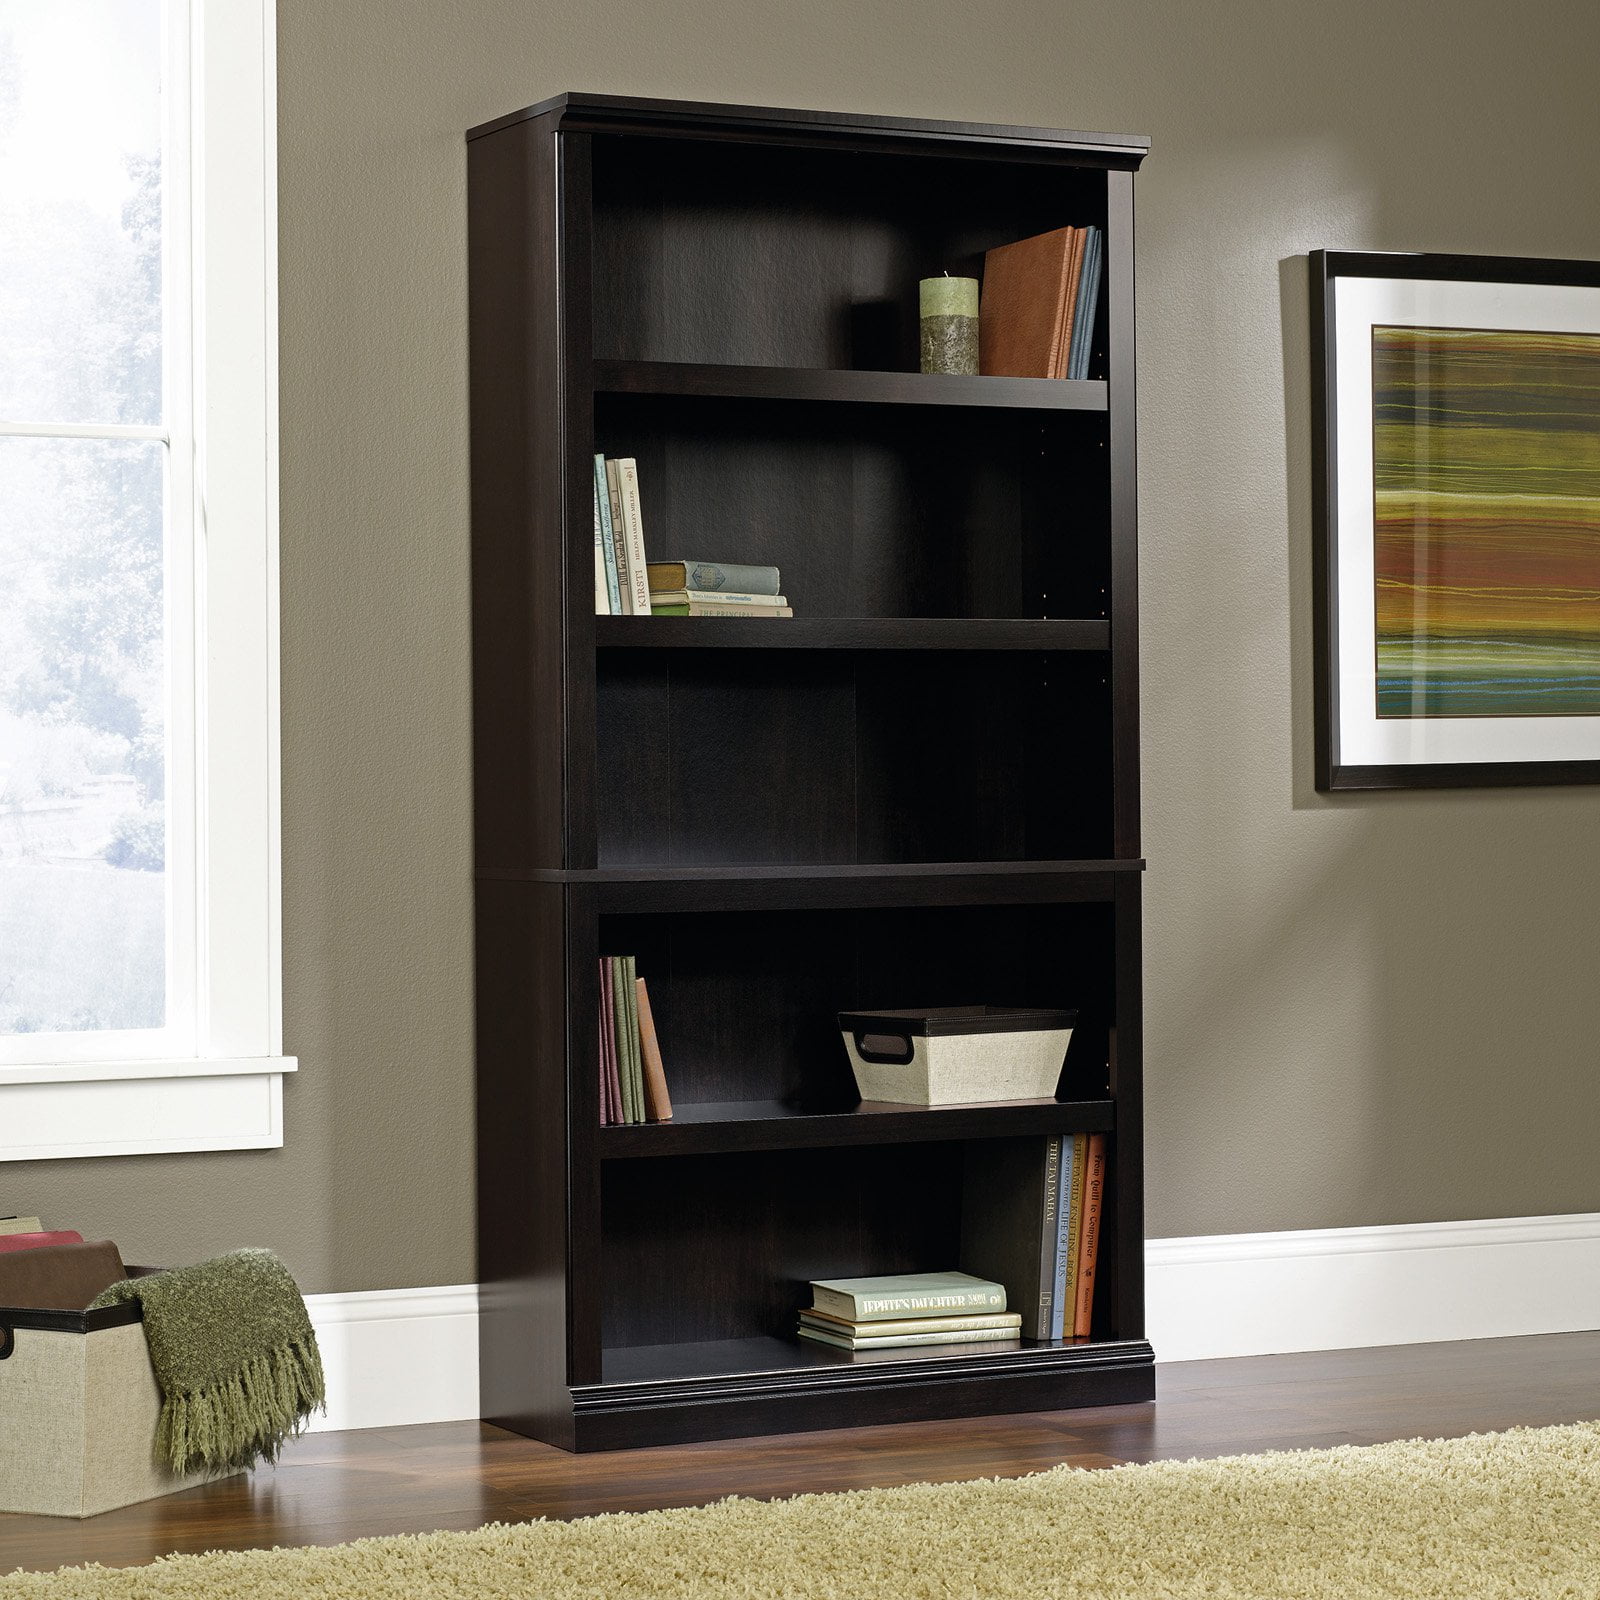 Sauder Select 5 Shelf Bookcase Estate, Sauder Select Collection 5 Shelf Bookcase Assembly Instructions